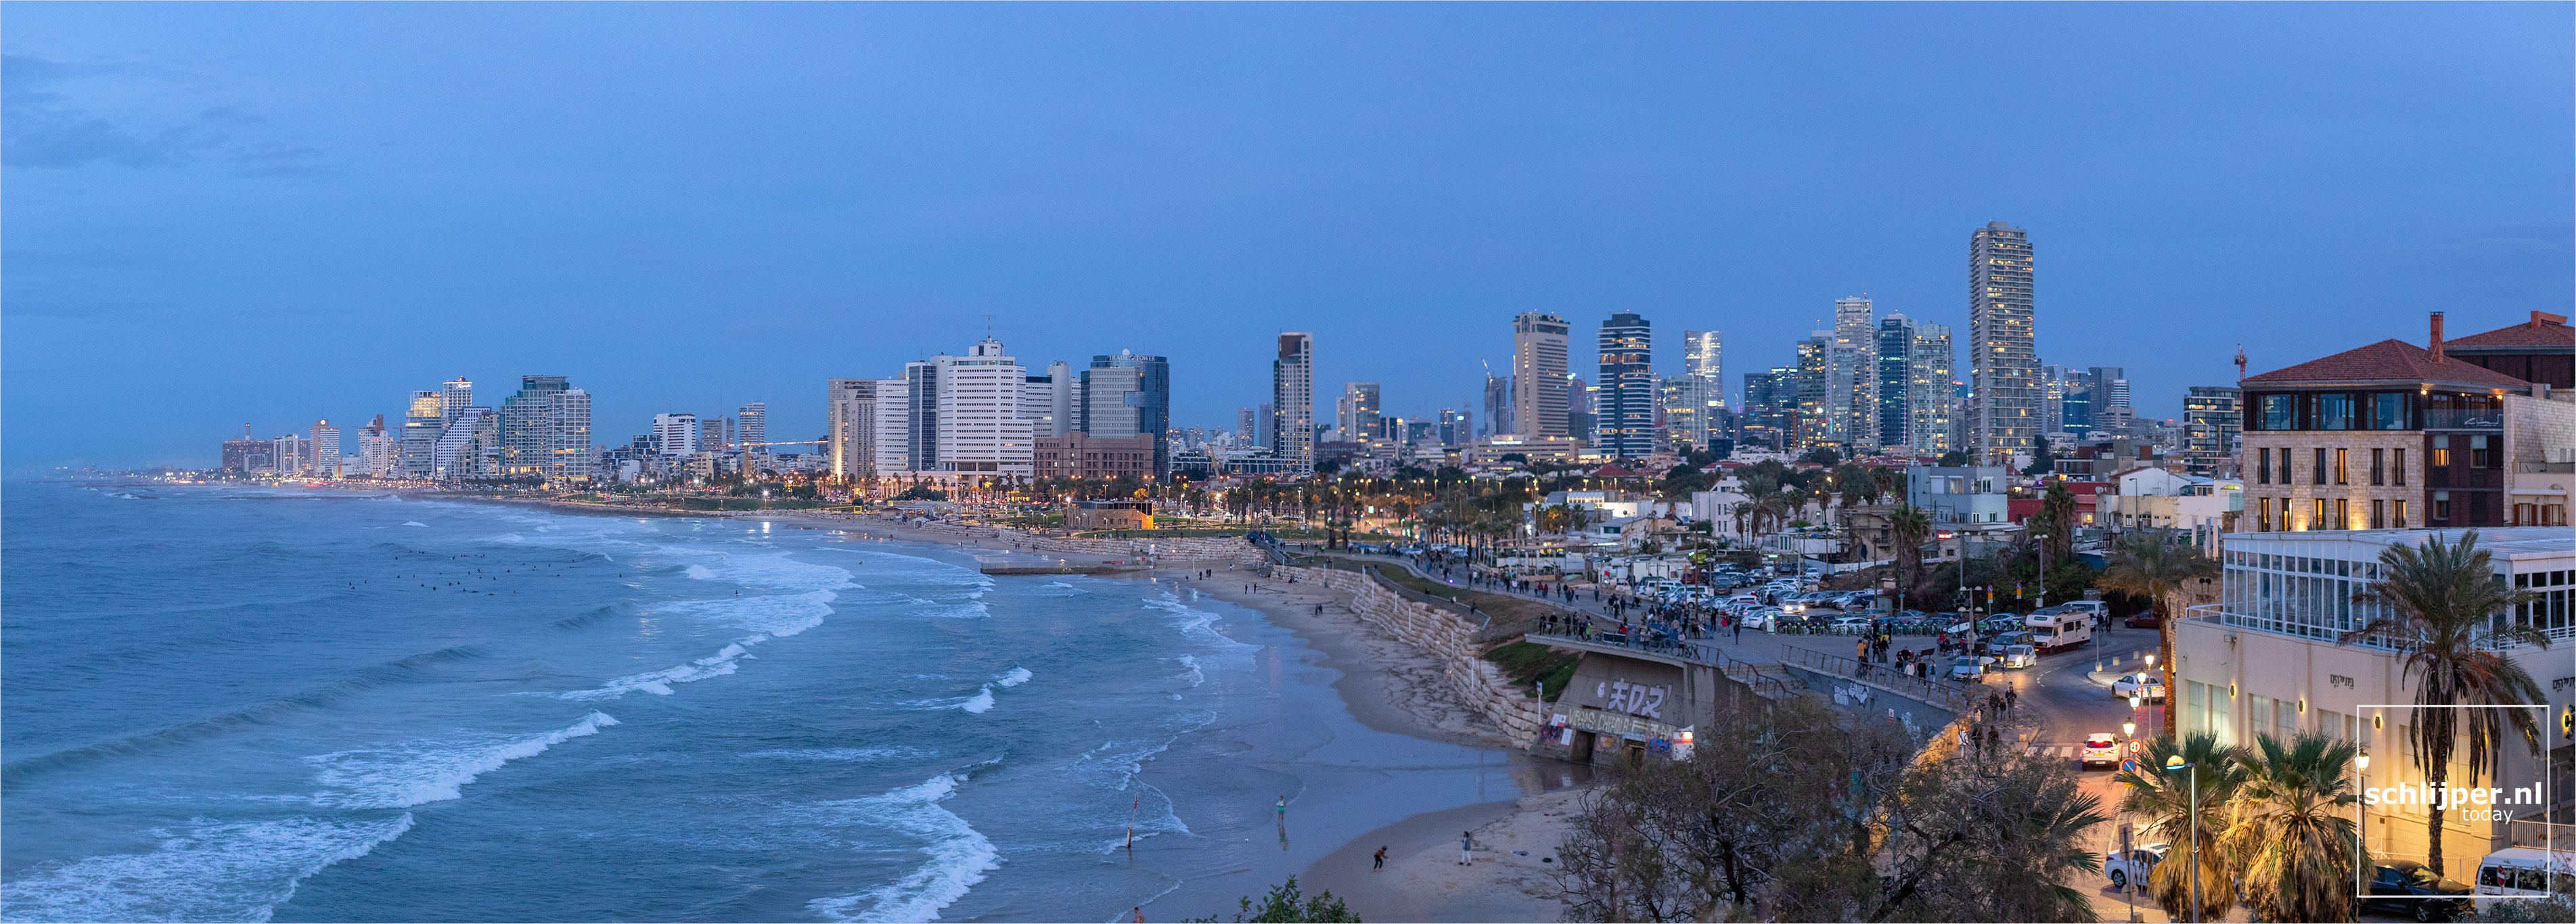 Israel, Tel Aviv - Yafo, 20 november 2021